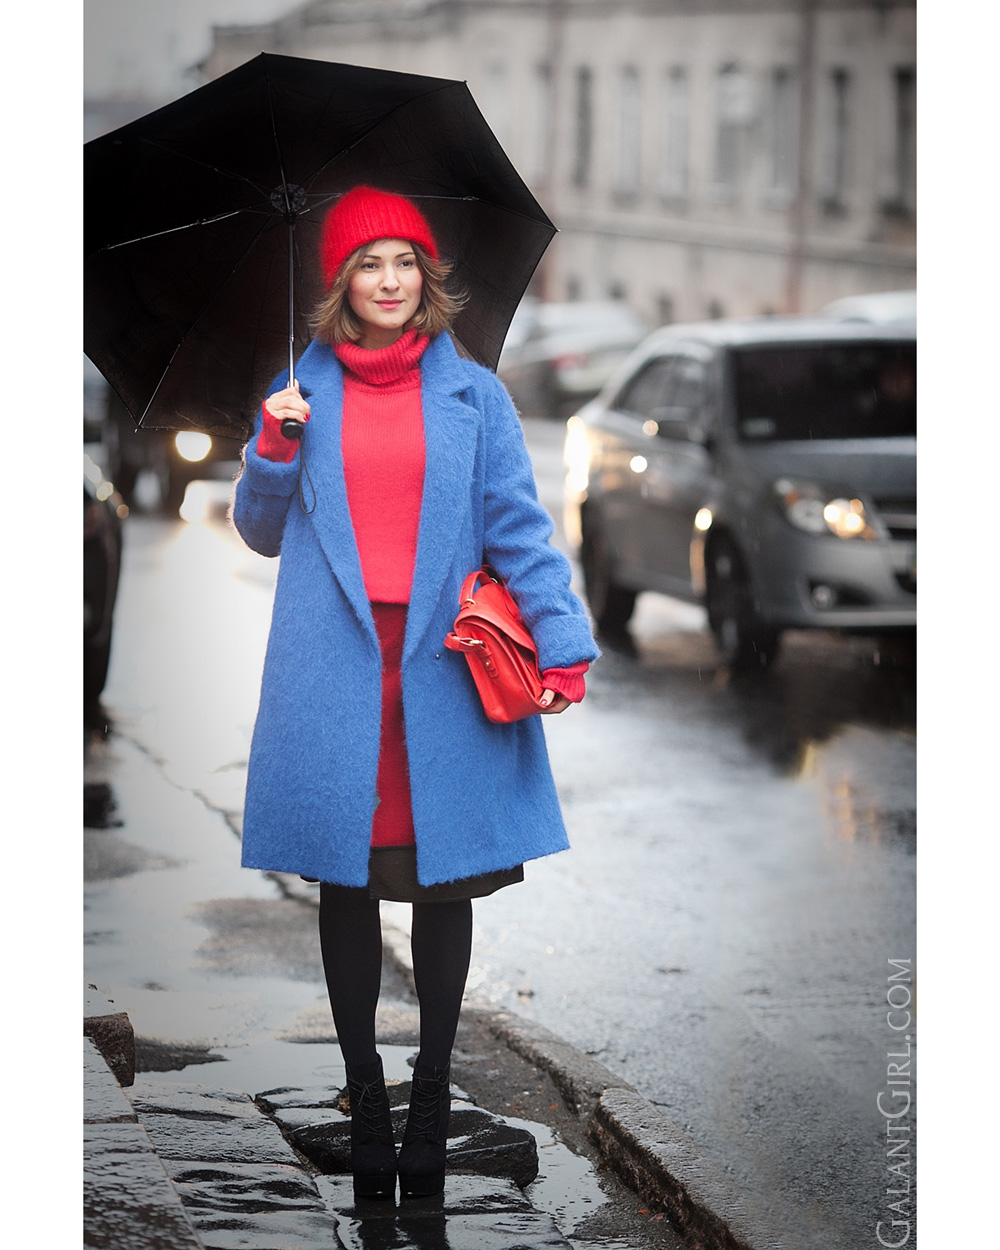 rainy-days+outfit+ideas-by-fashion+blogger+Runet+ellena+galant